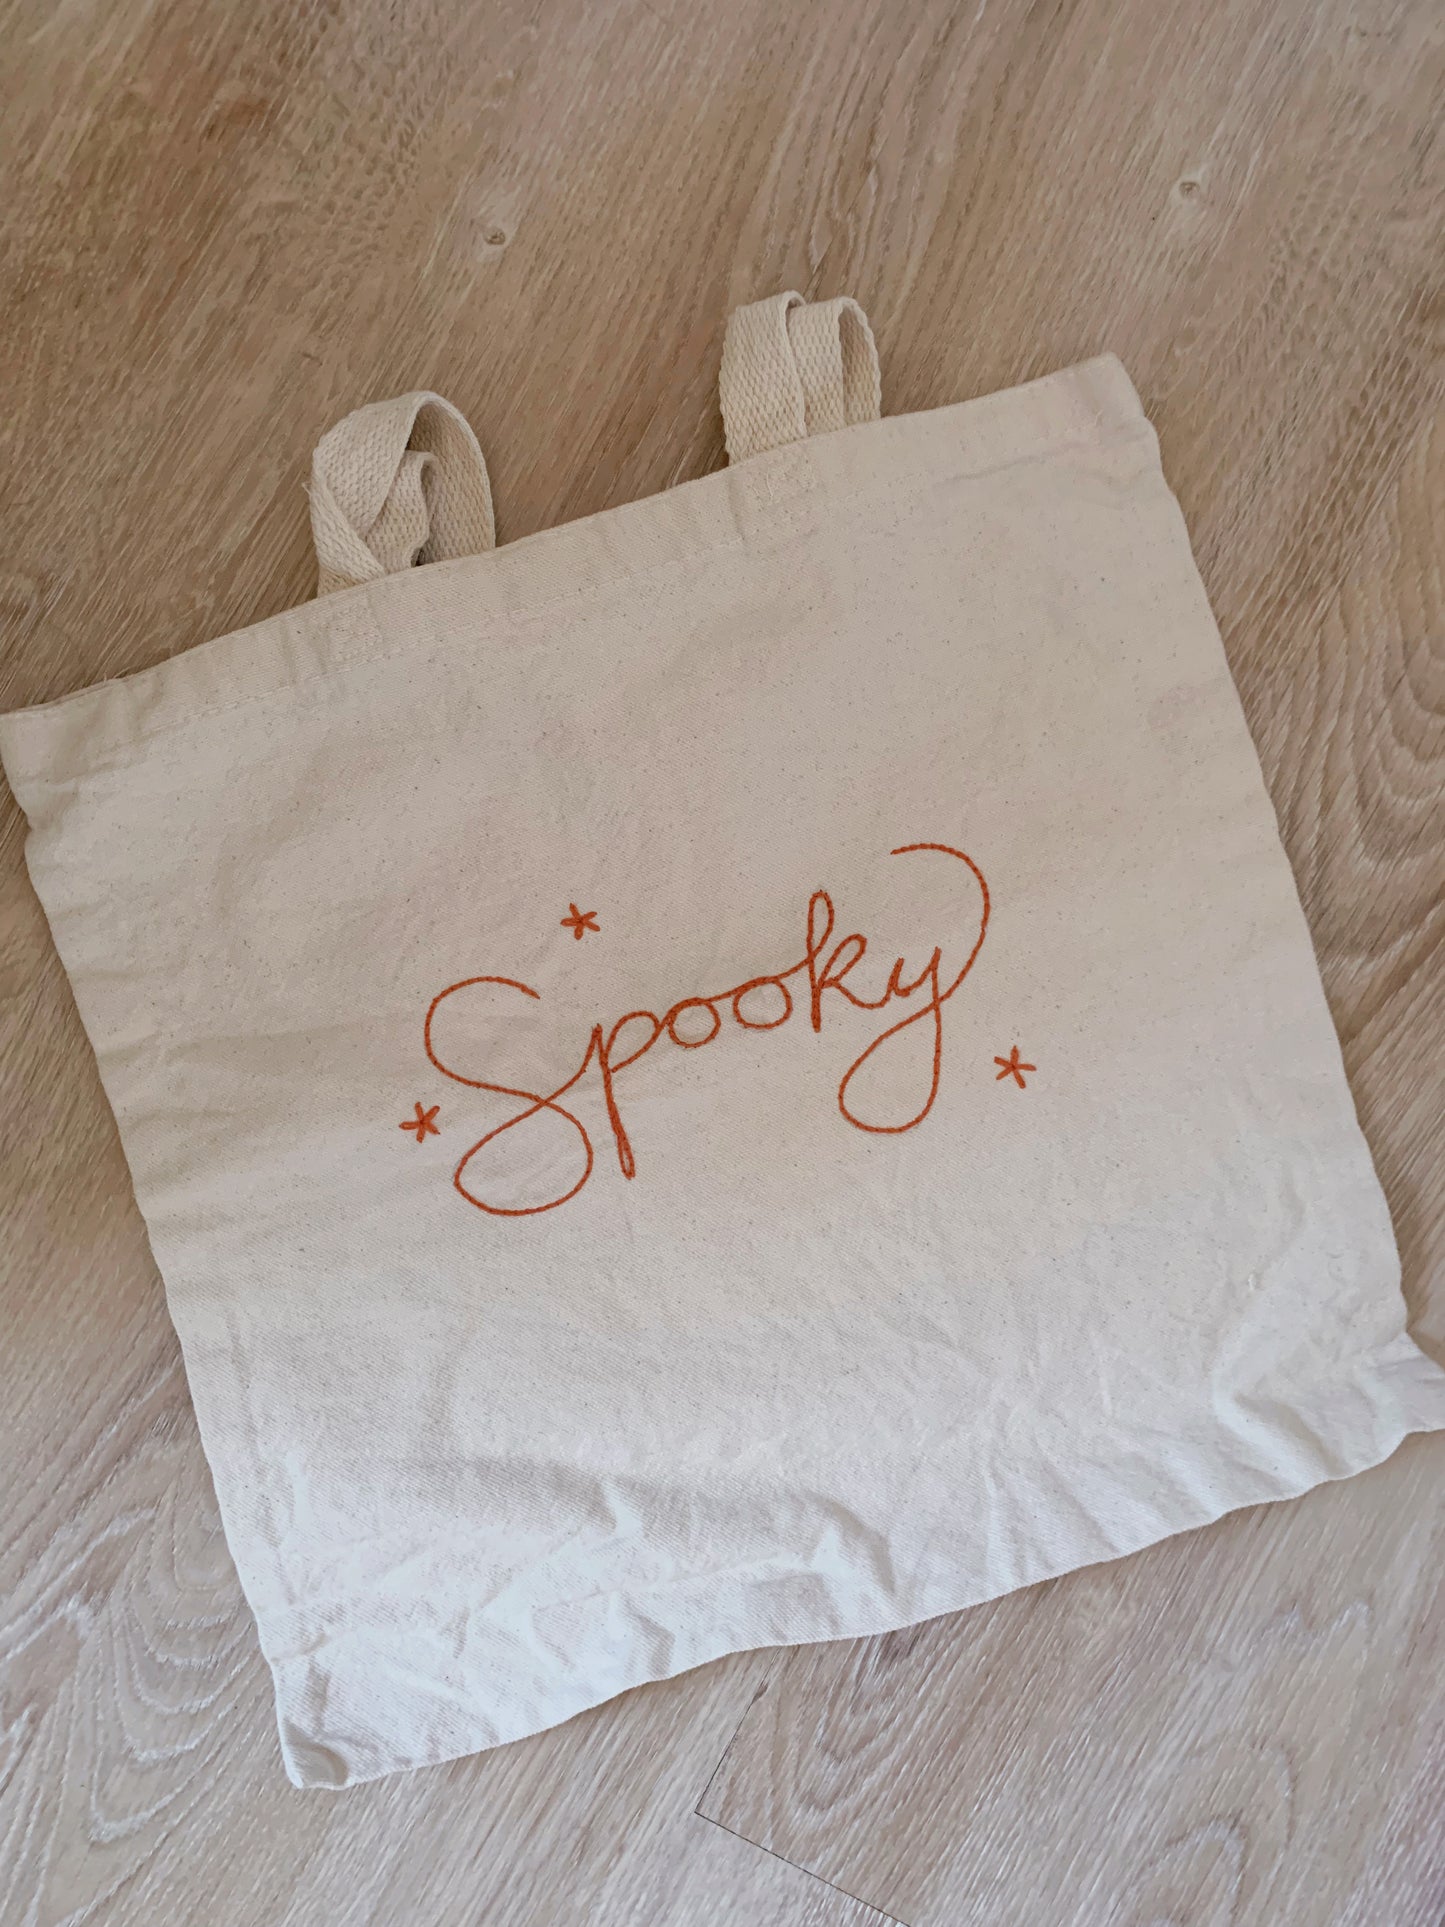 Spooky tote bag